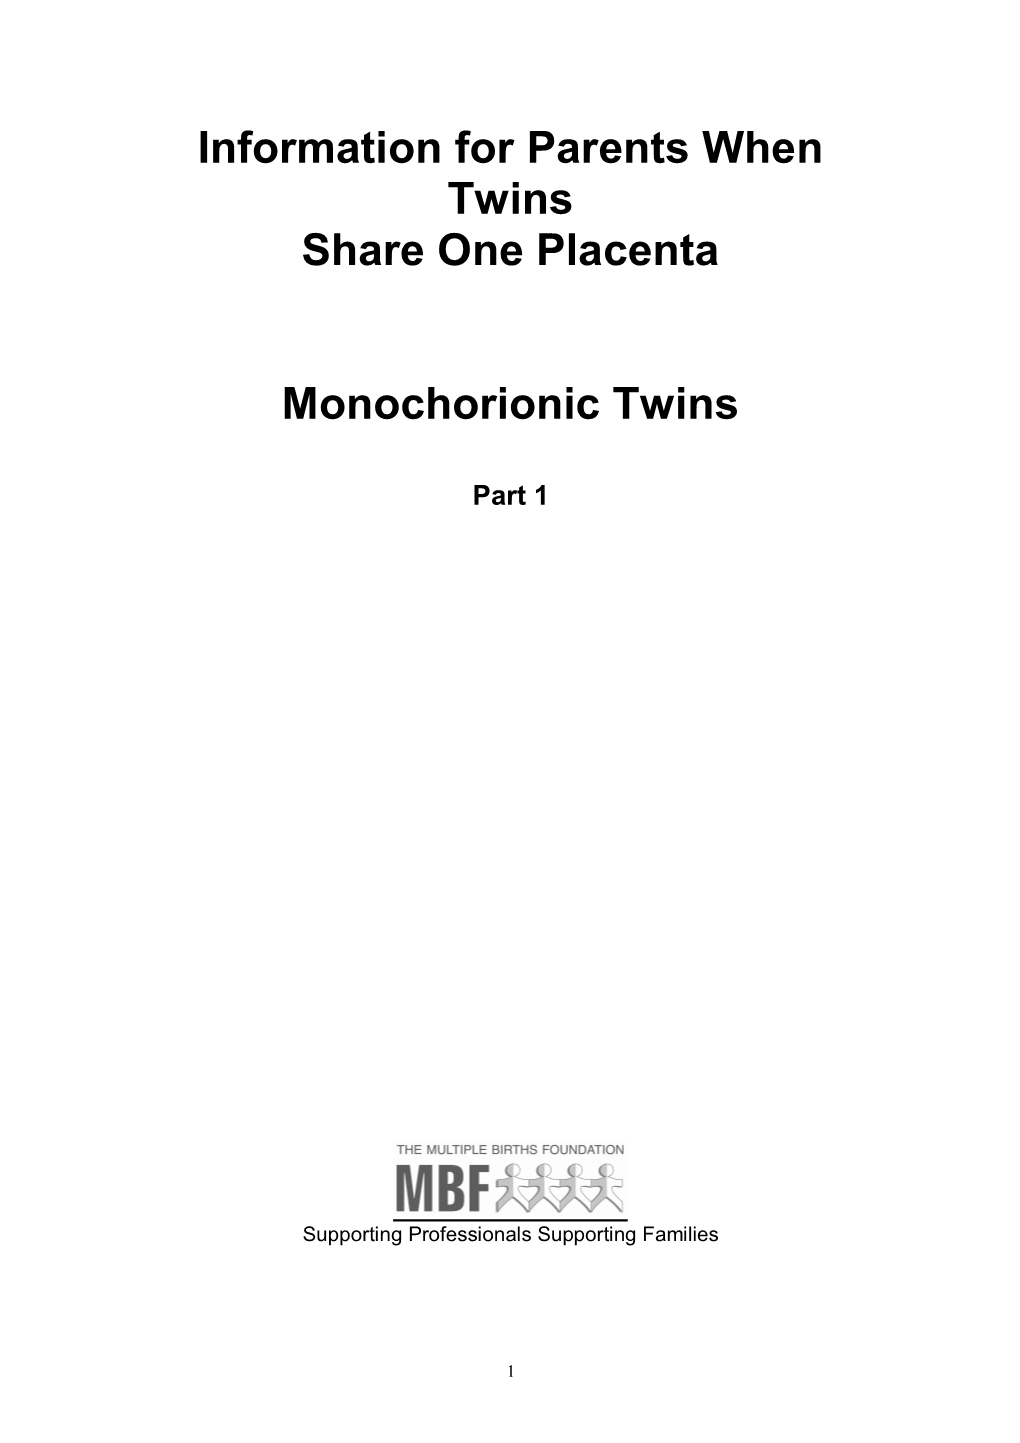 Monochorionic Twins